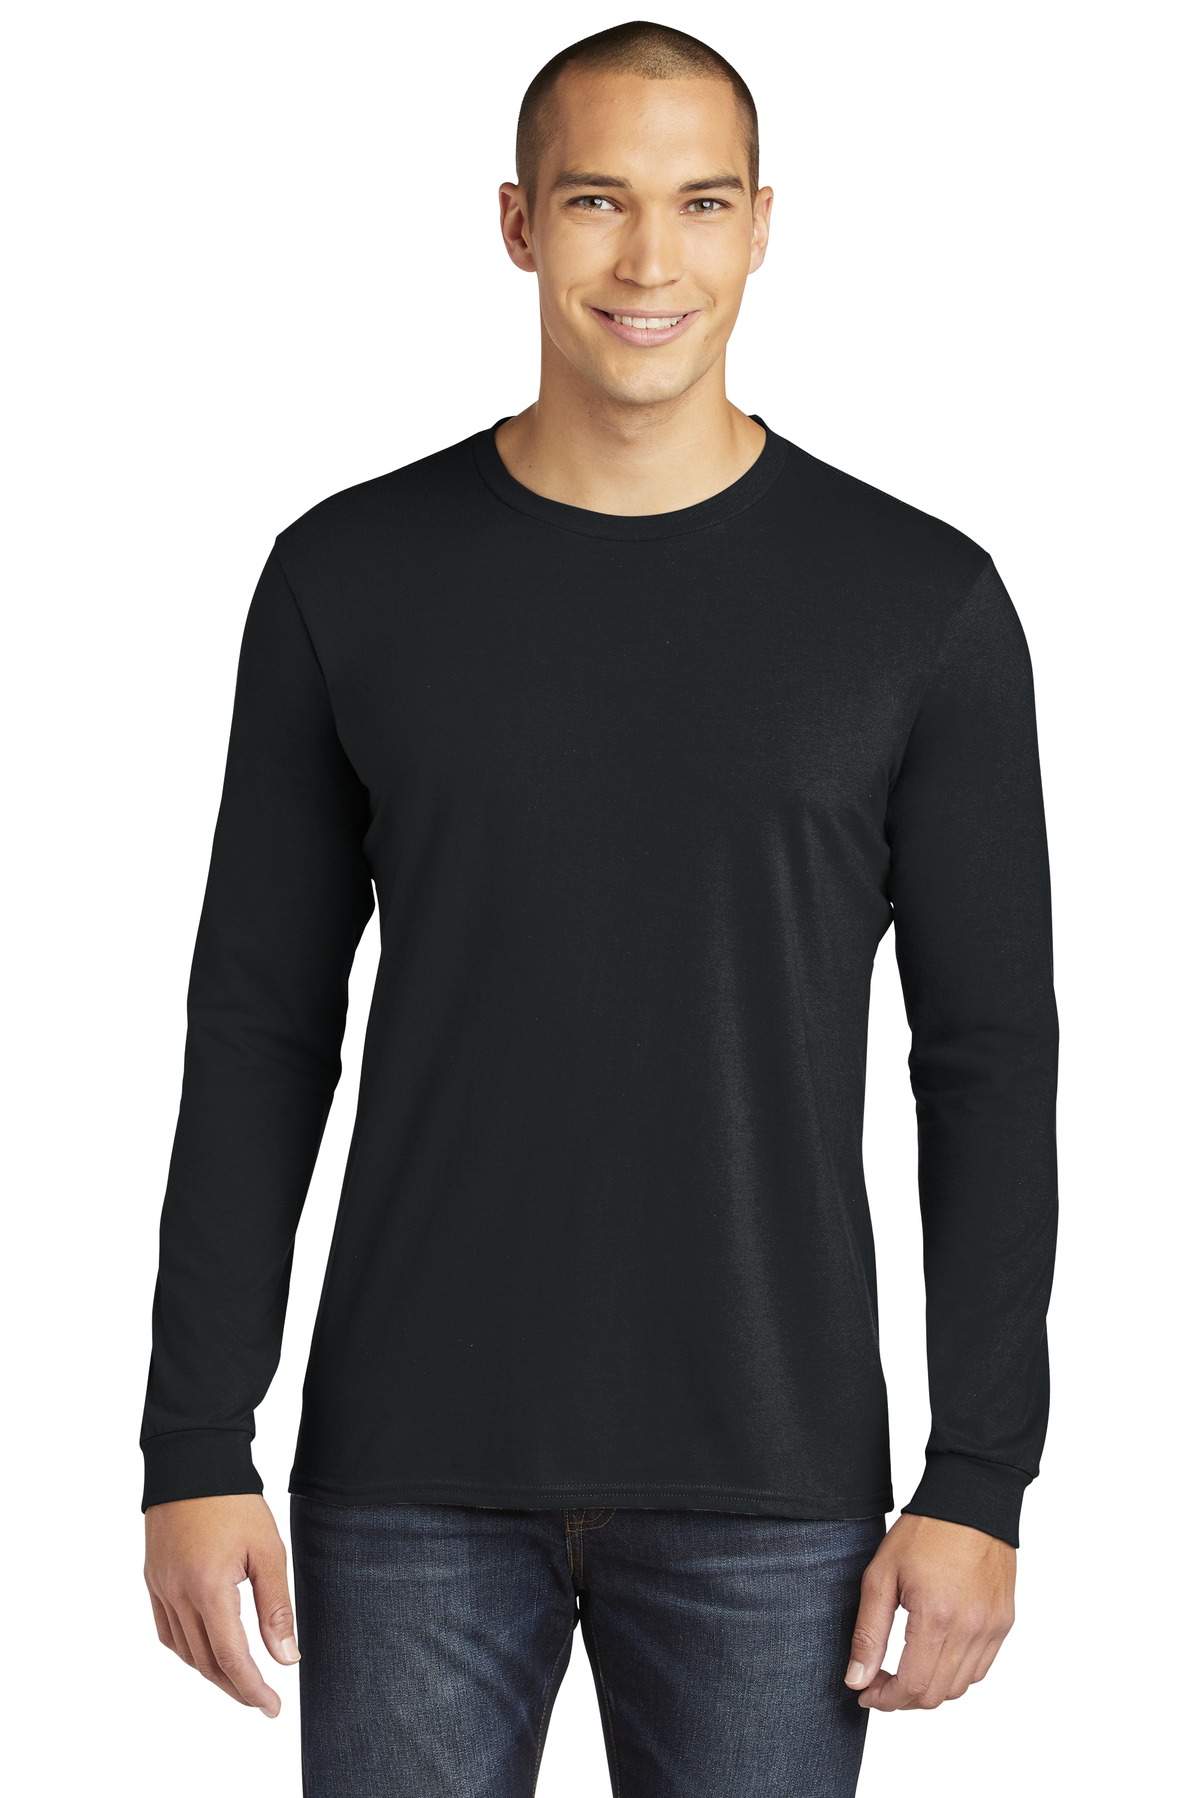 Anvil 100% Combed Ring Spun Cotton Long Sleeve T-Shirt. 949